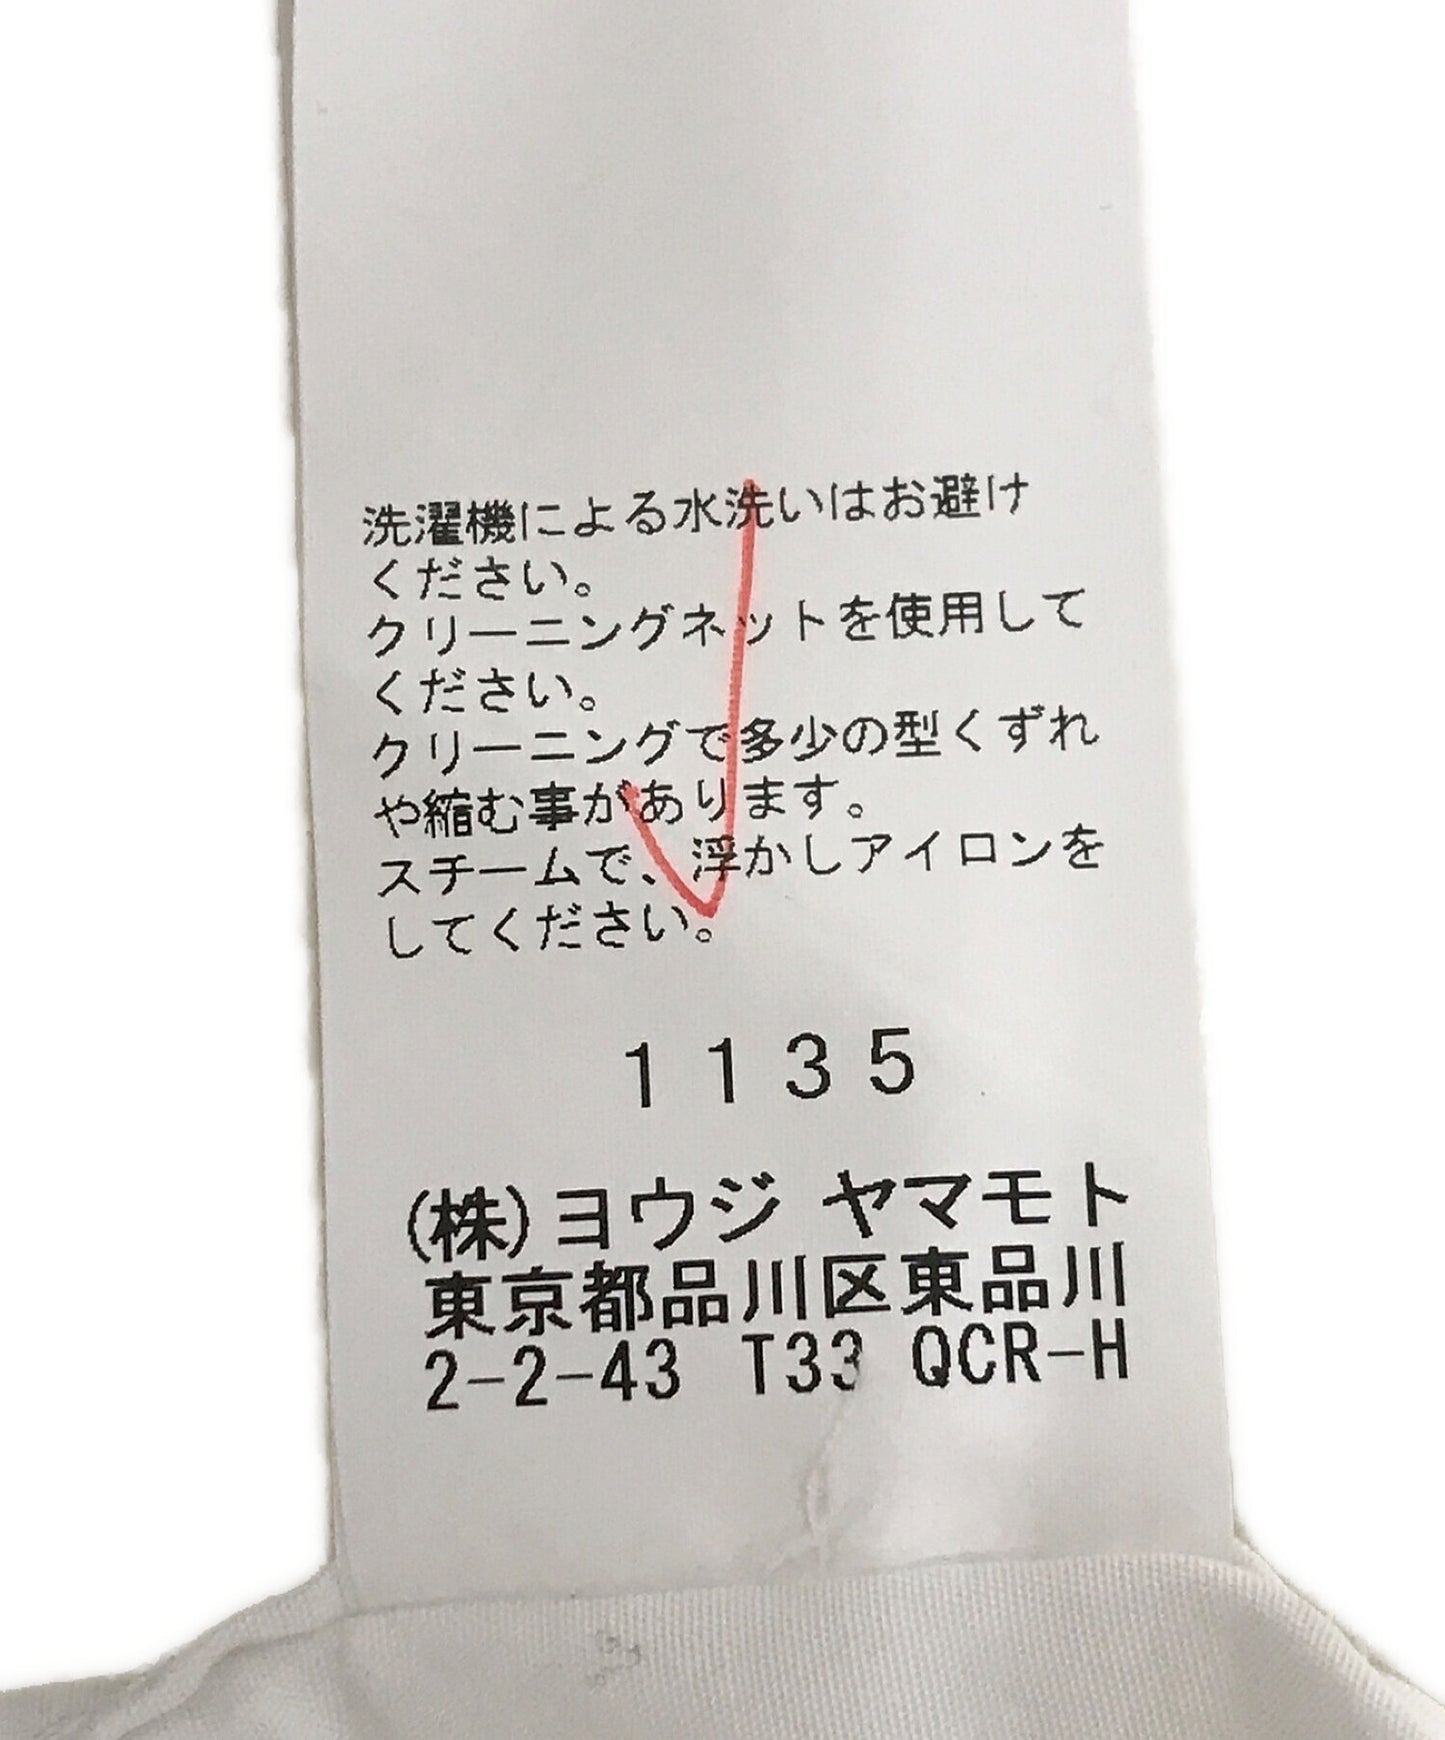 Yohji Yamamoto Pour Homme環形縫線寬布正規領長襯衫HW-B01-001